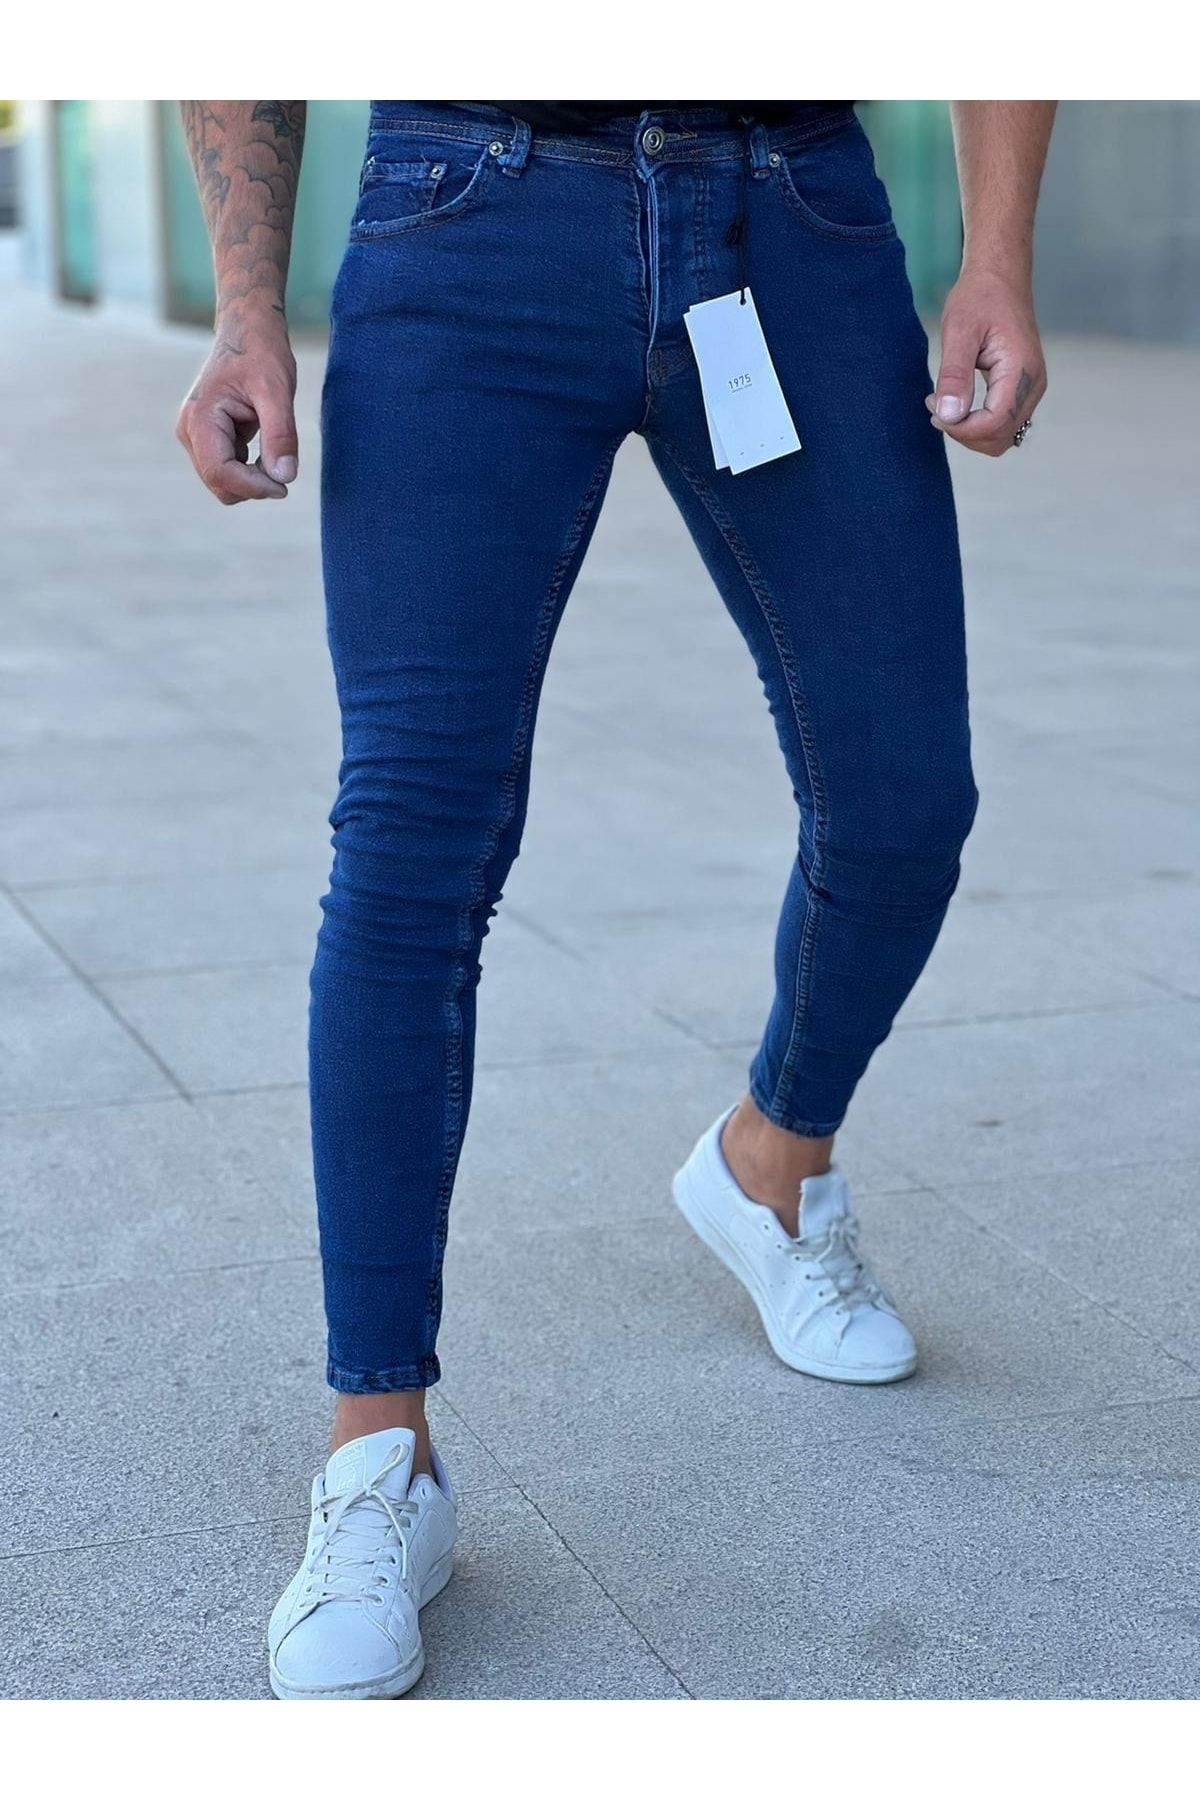 LASESS Erkek Jeans Skinny Fit Likralı Açık Brich Yıkama Kot Pantolon